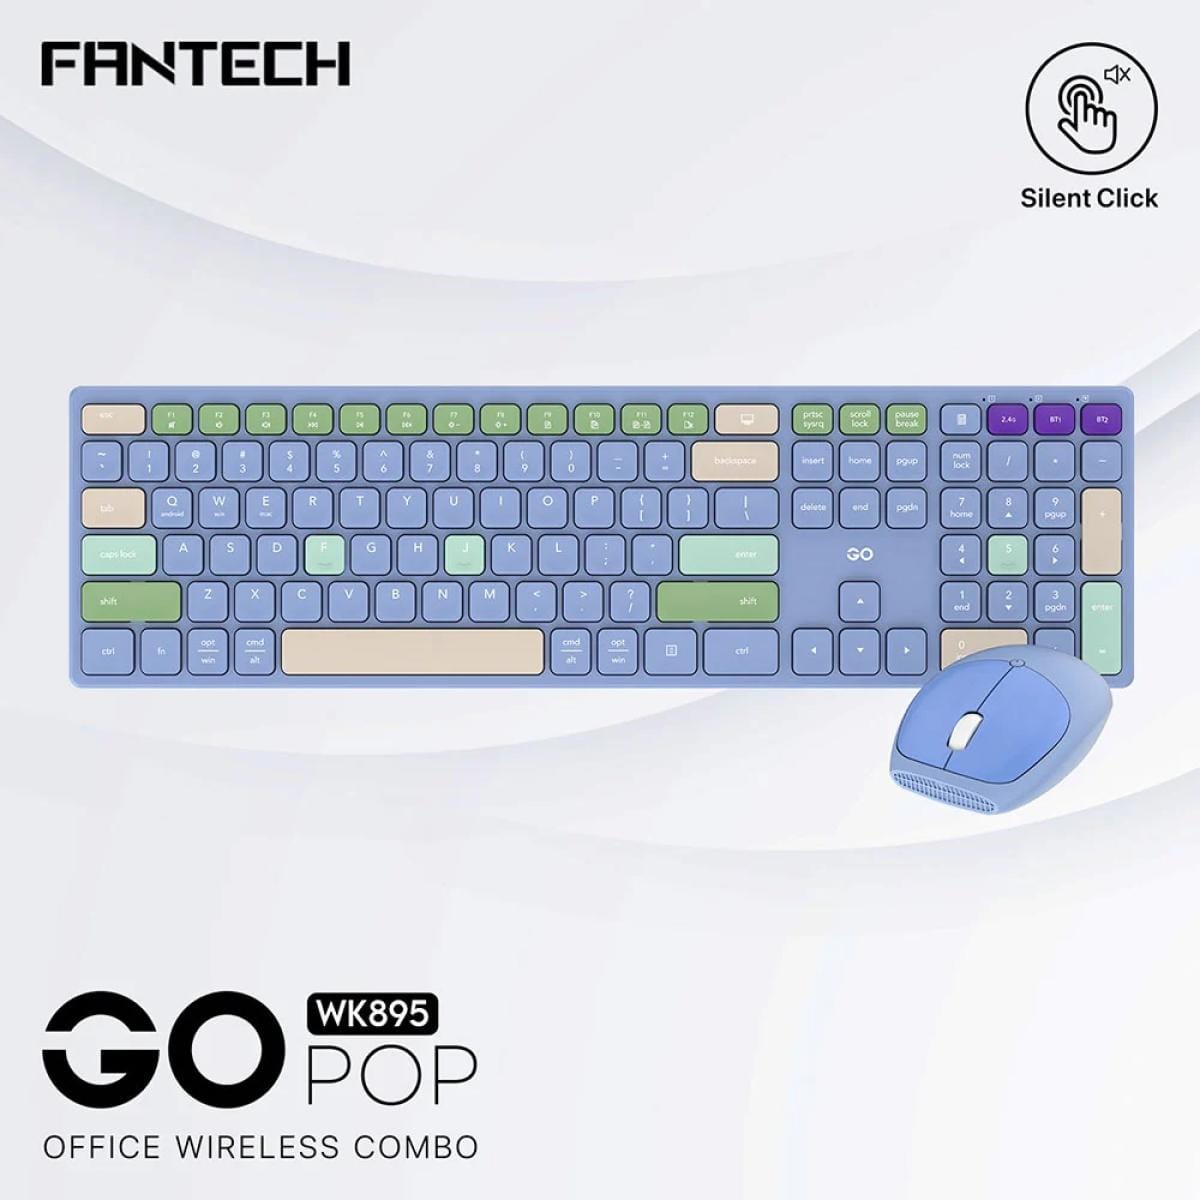 FANTECH Keyboard Blue Fantech GO POP WK895 Kit Office Combo keyboard and mouse Wireless Dual Mode  Silent Switches & Multimedia Function Keys (Gray + Black + beige + Blue ) For Mac & Win